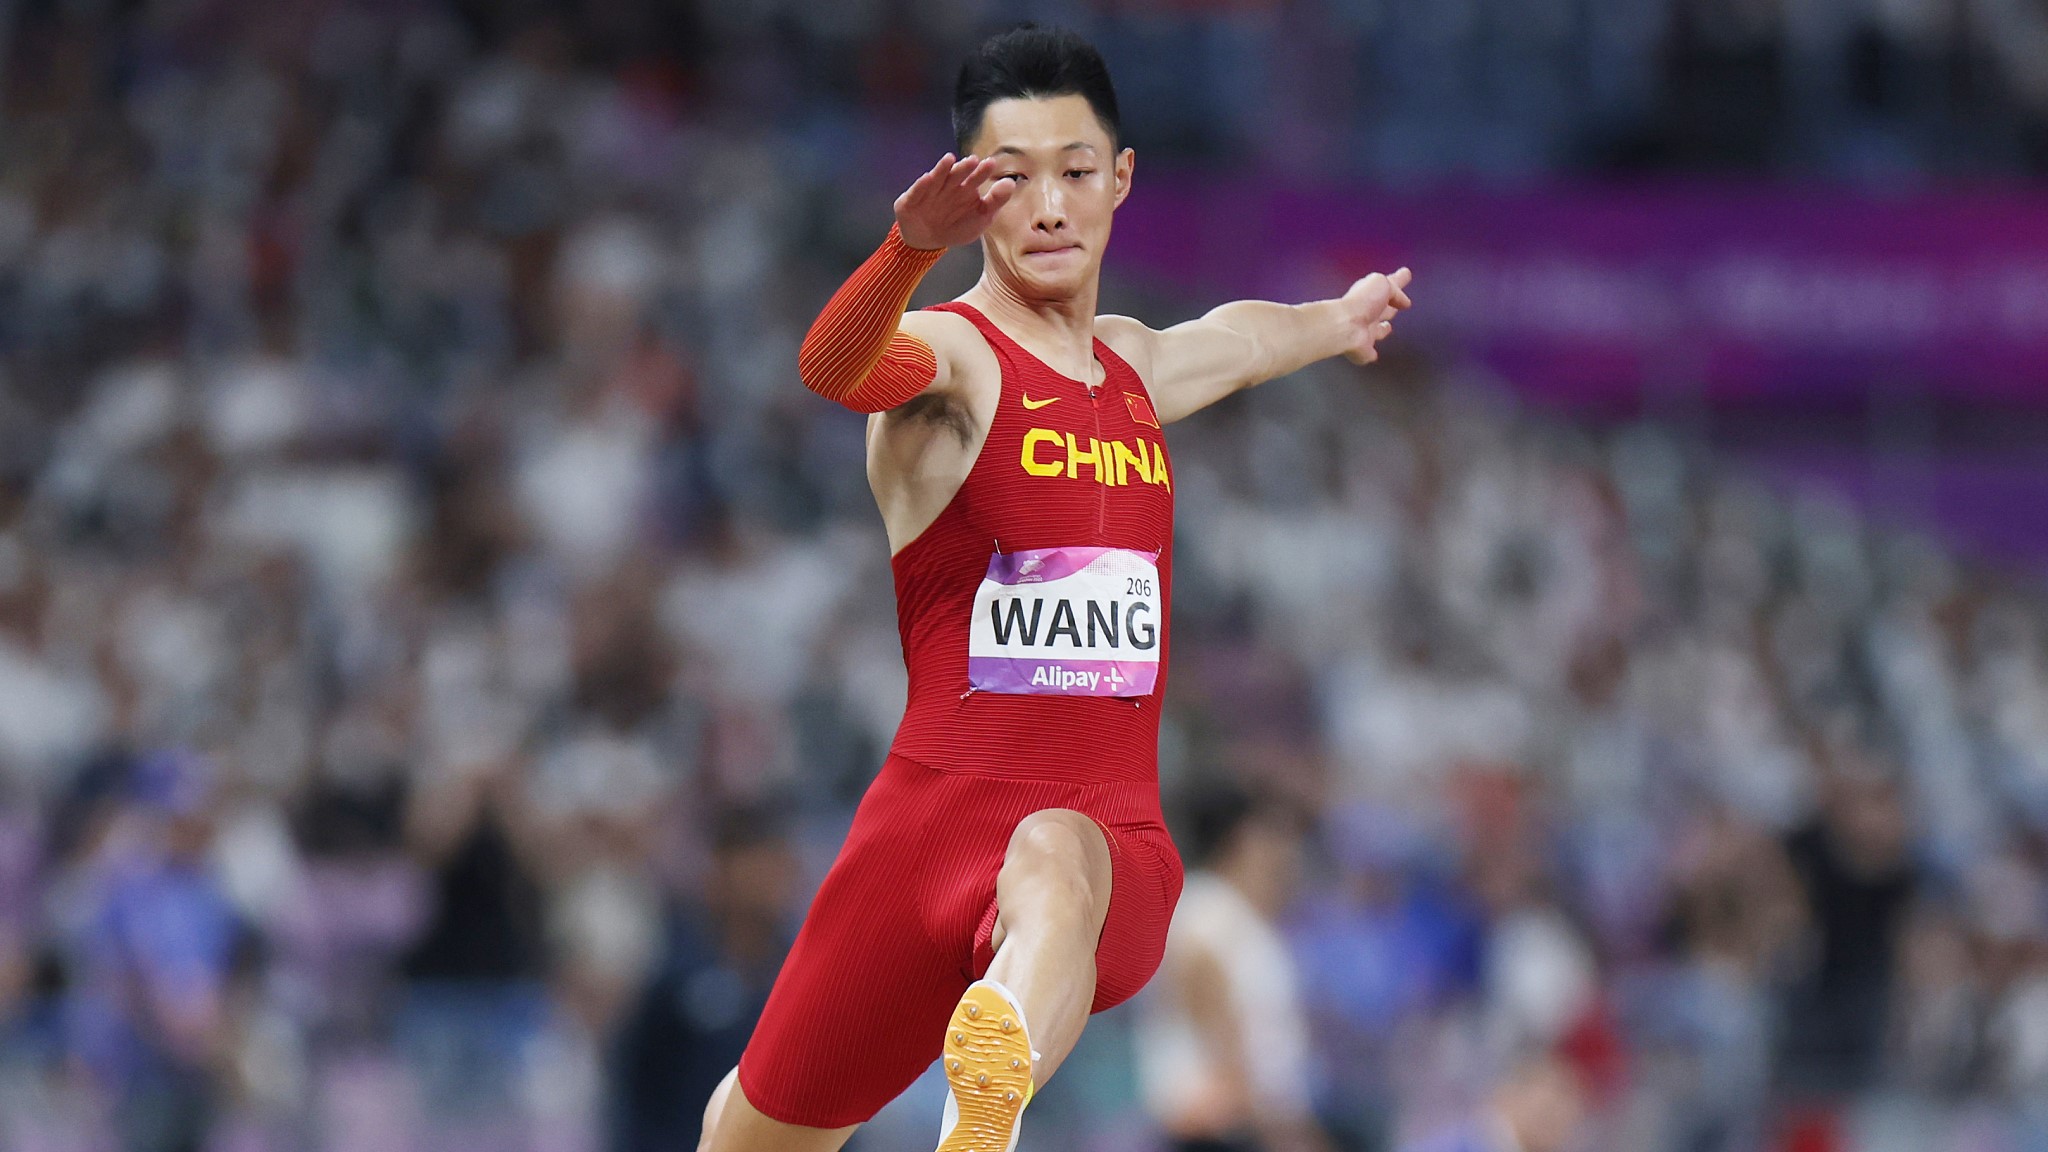 Chinese long jumper Wang Jianan aims for new breakthrough in Paris